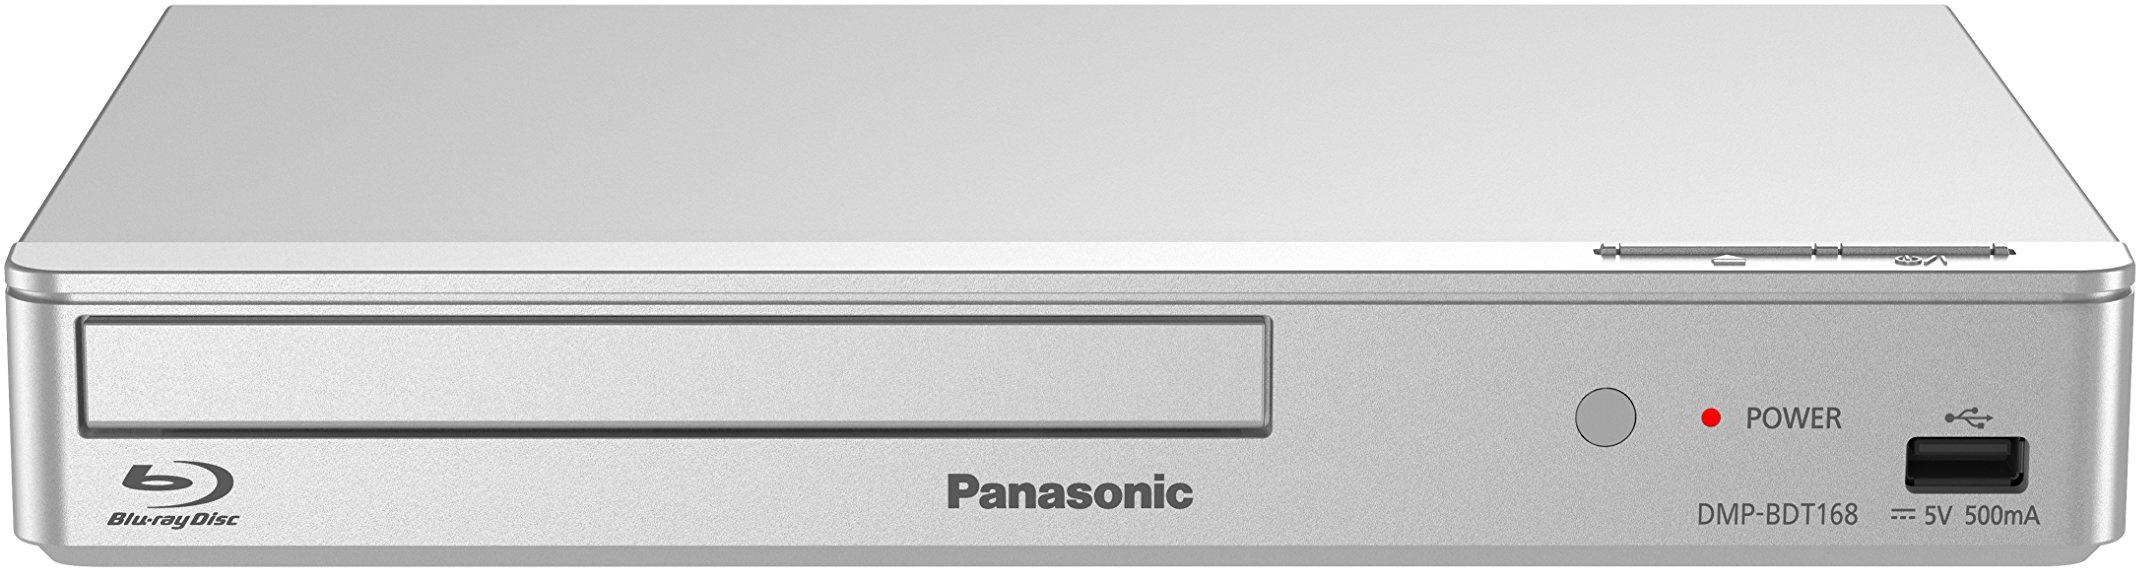 Panasonic DMP-BDT168EG Kompakter 3D Blu-ray Player (Full HD Upscaling, Internet Apps, LAN-Anschluss, USB, MKV-Playback) silber